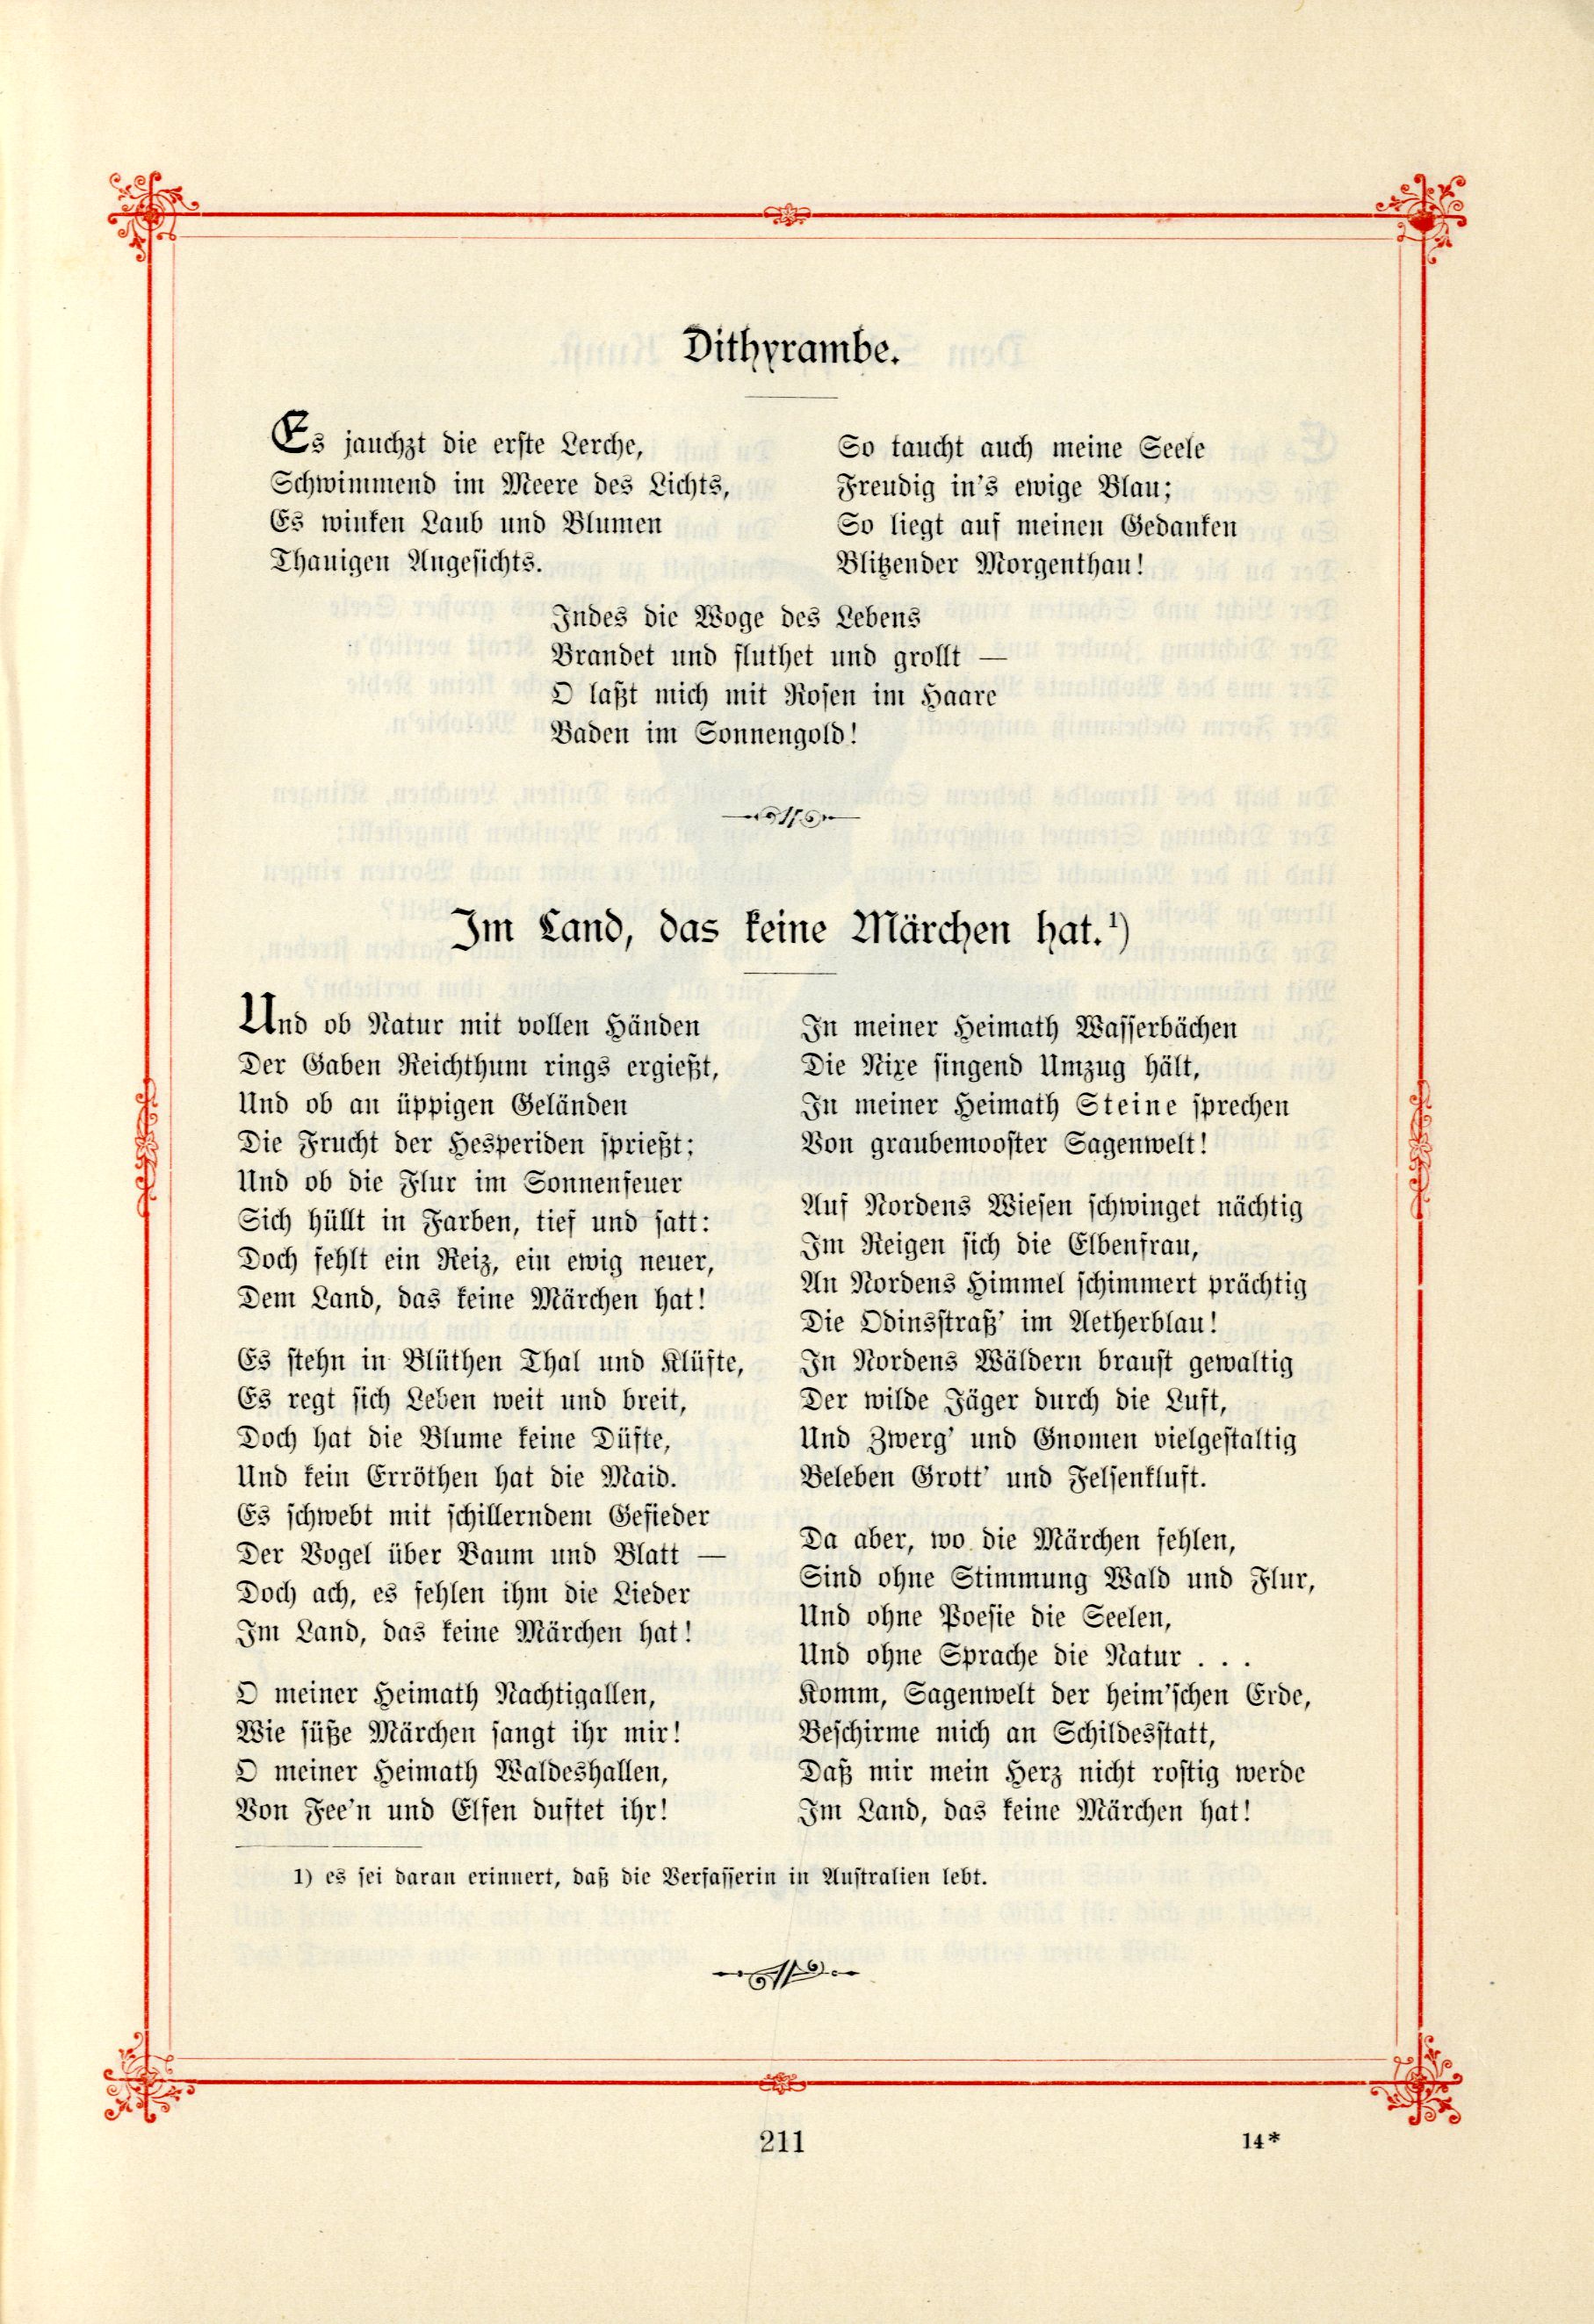 Dithyrambe (1895) | 1. (211) Main body of text